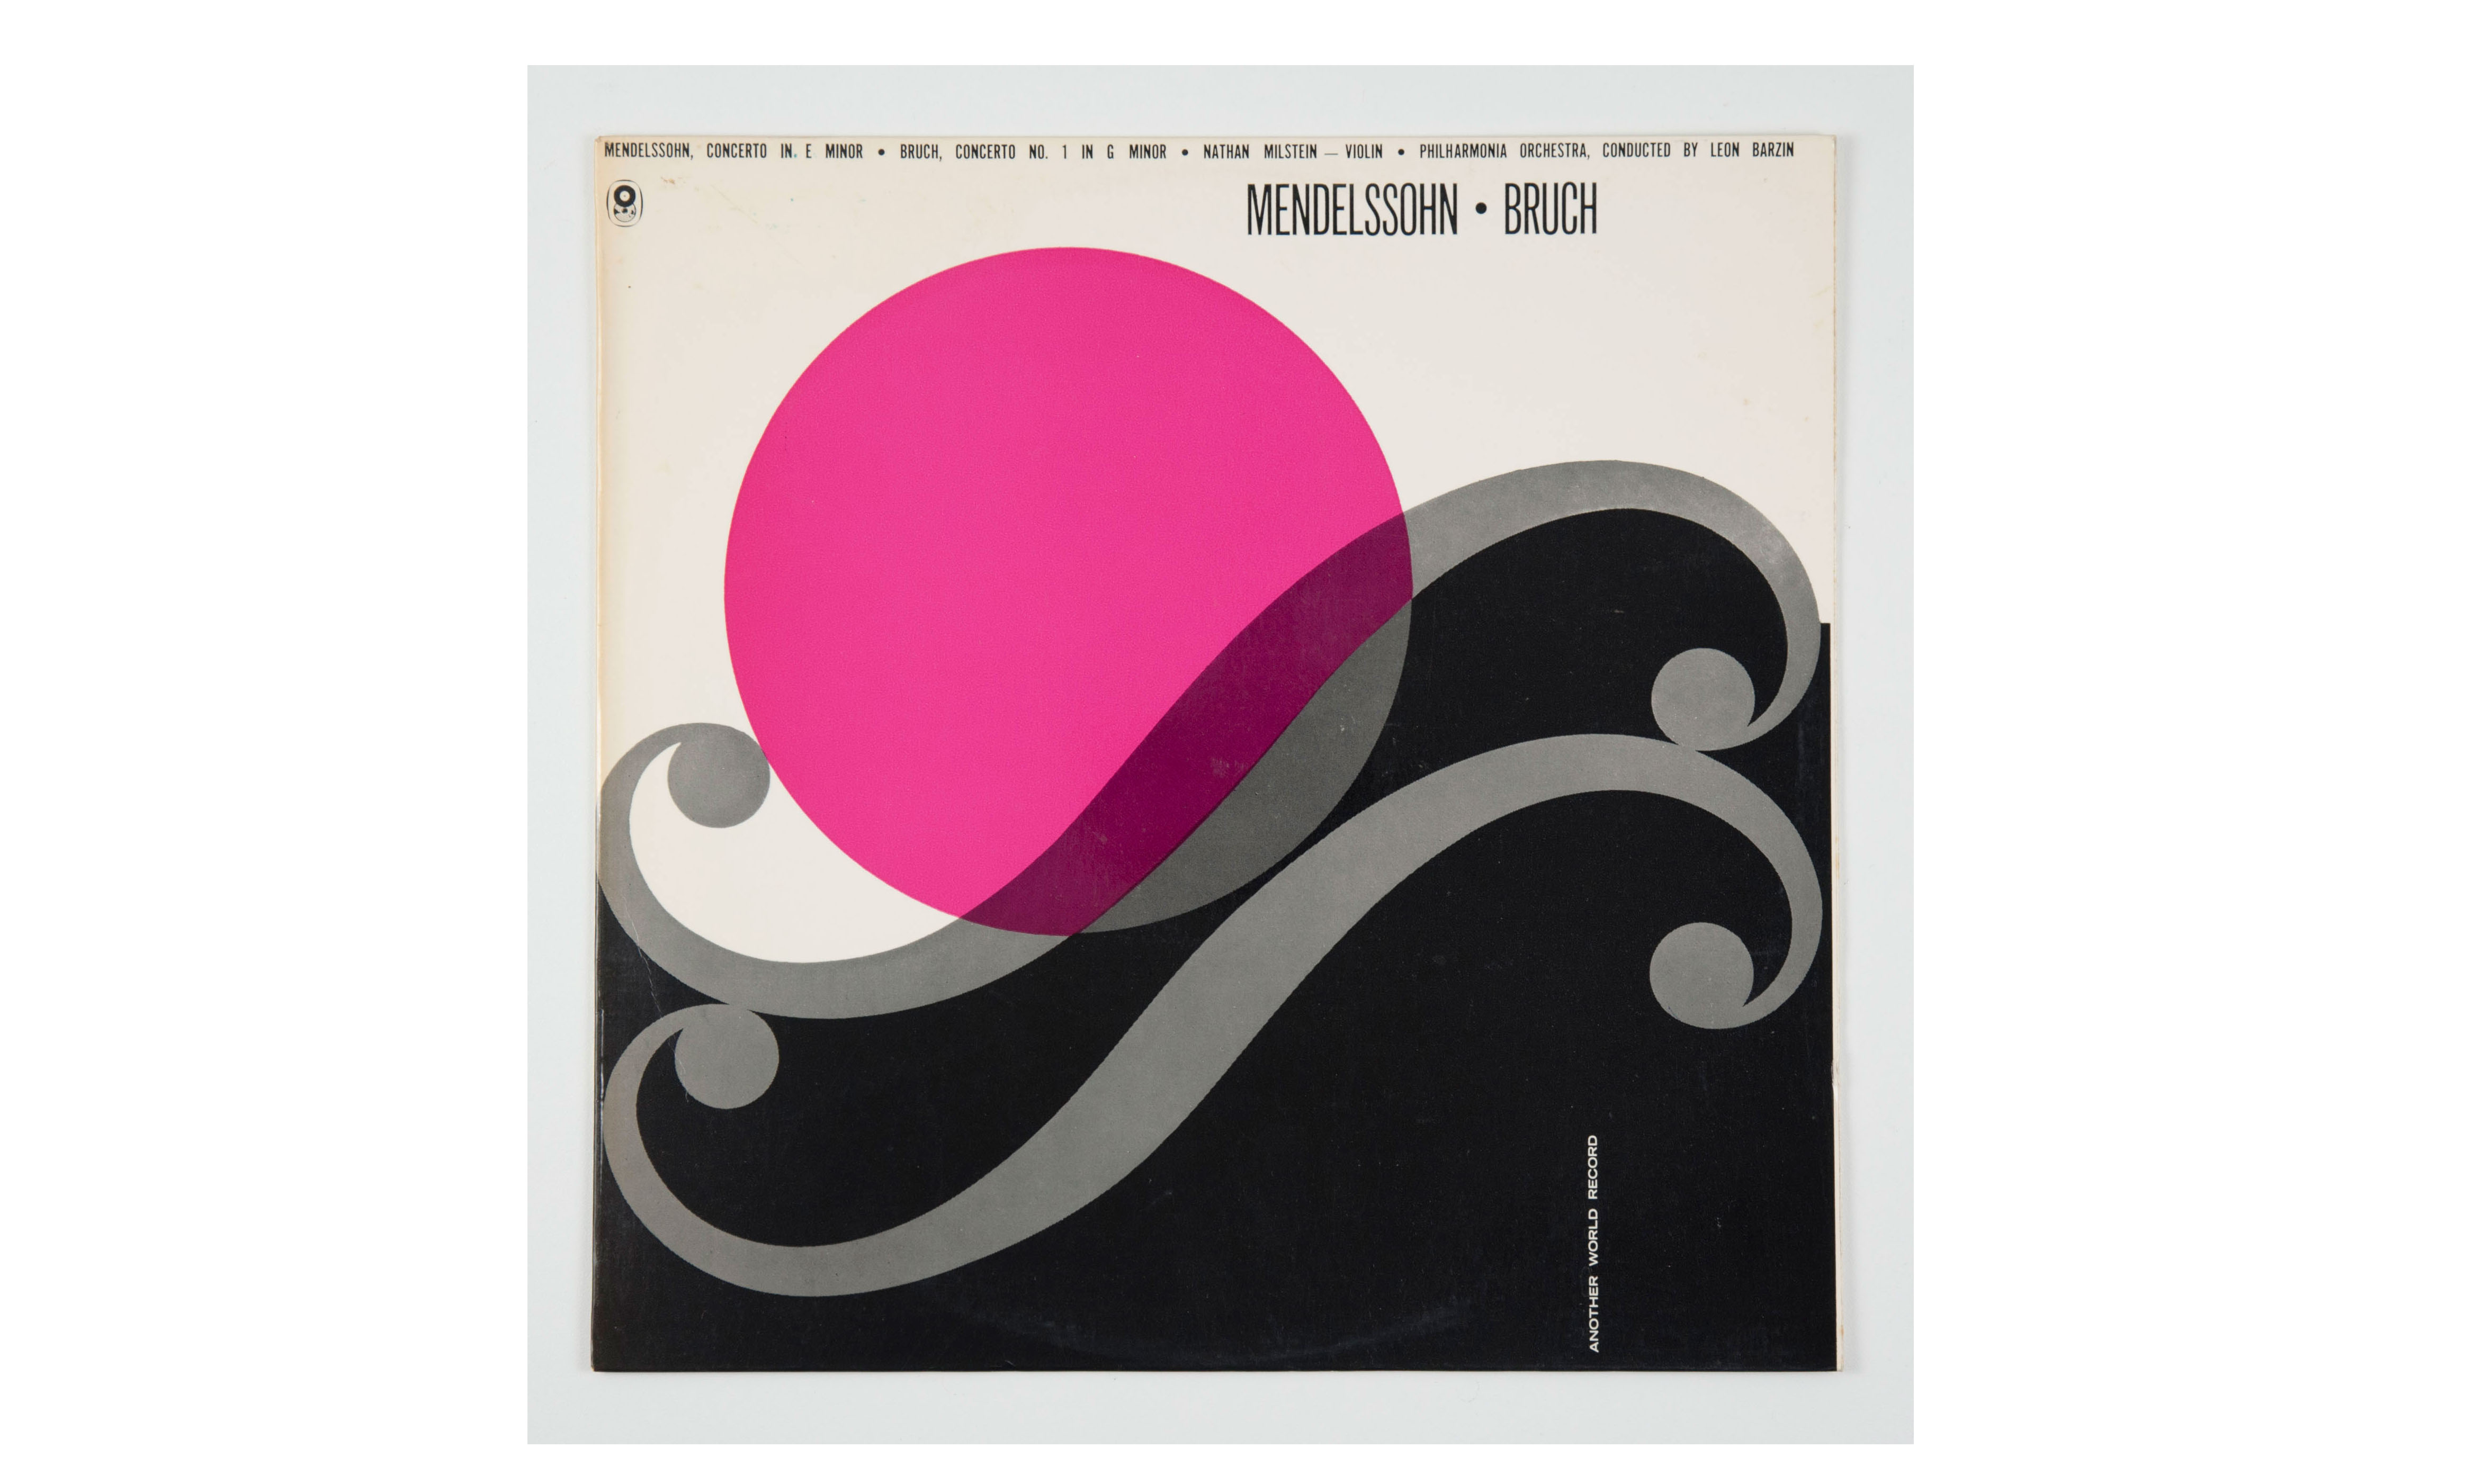 Gus van der Heyde (1937), Cover for record titled Mendelssohn and Bruch Violin Concertos, 1960-63. Album cover, ink, cardboard, letterpress printing. RMIT Design Archives. Image: Stephanie Bradford, courtesy RMIT Design Archives.